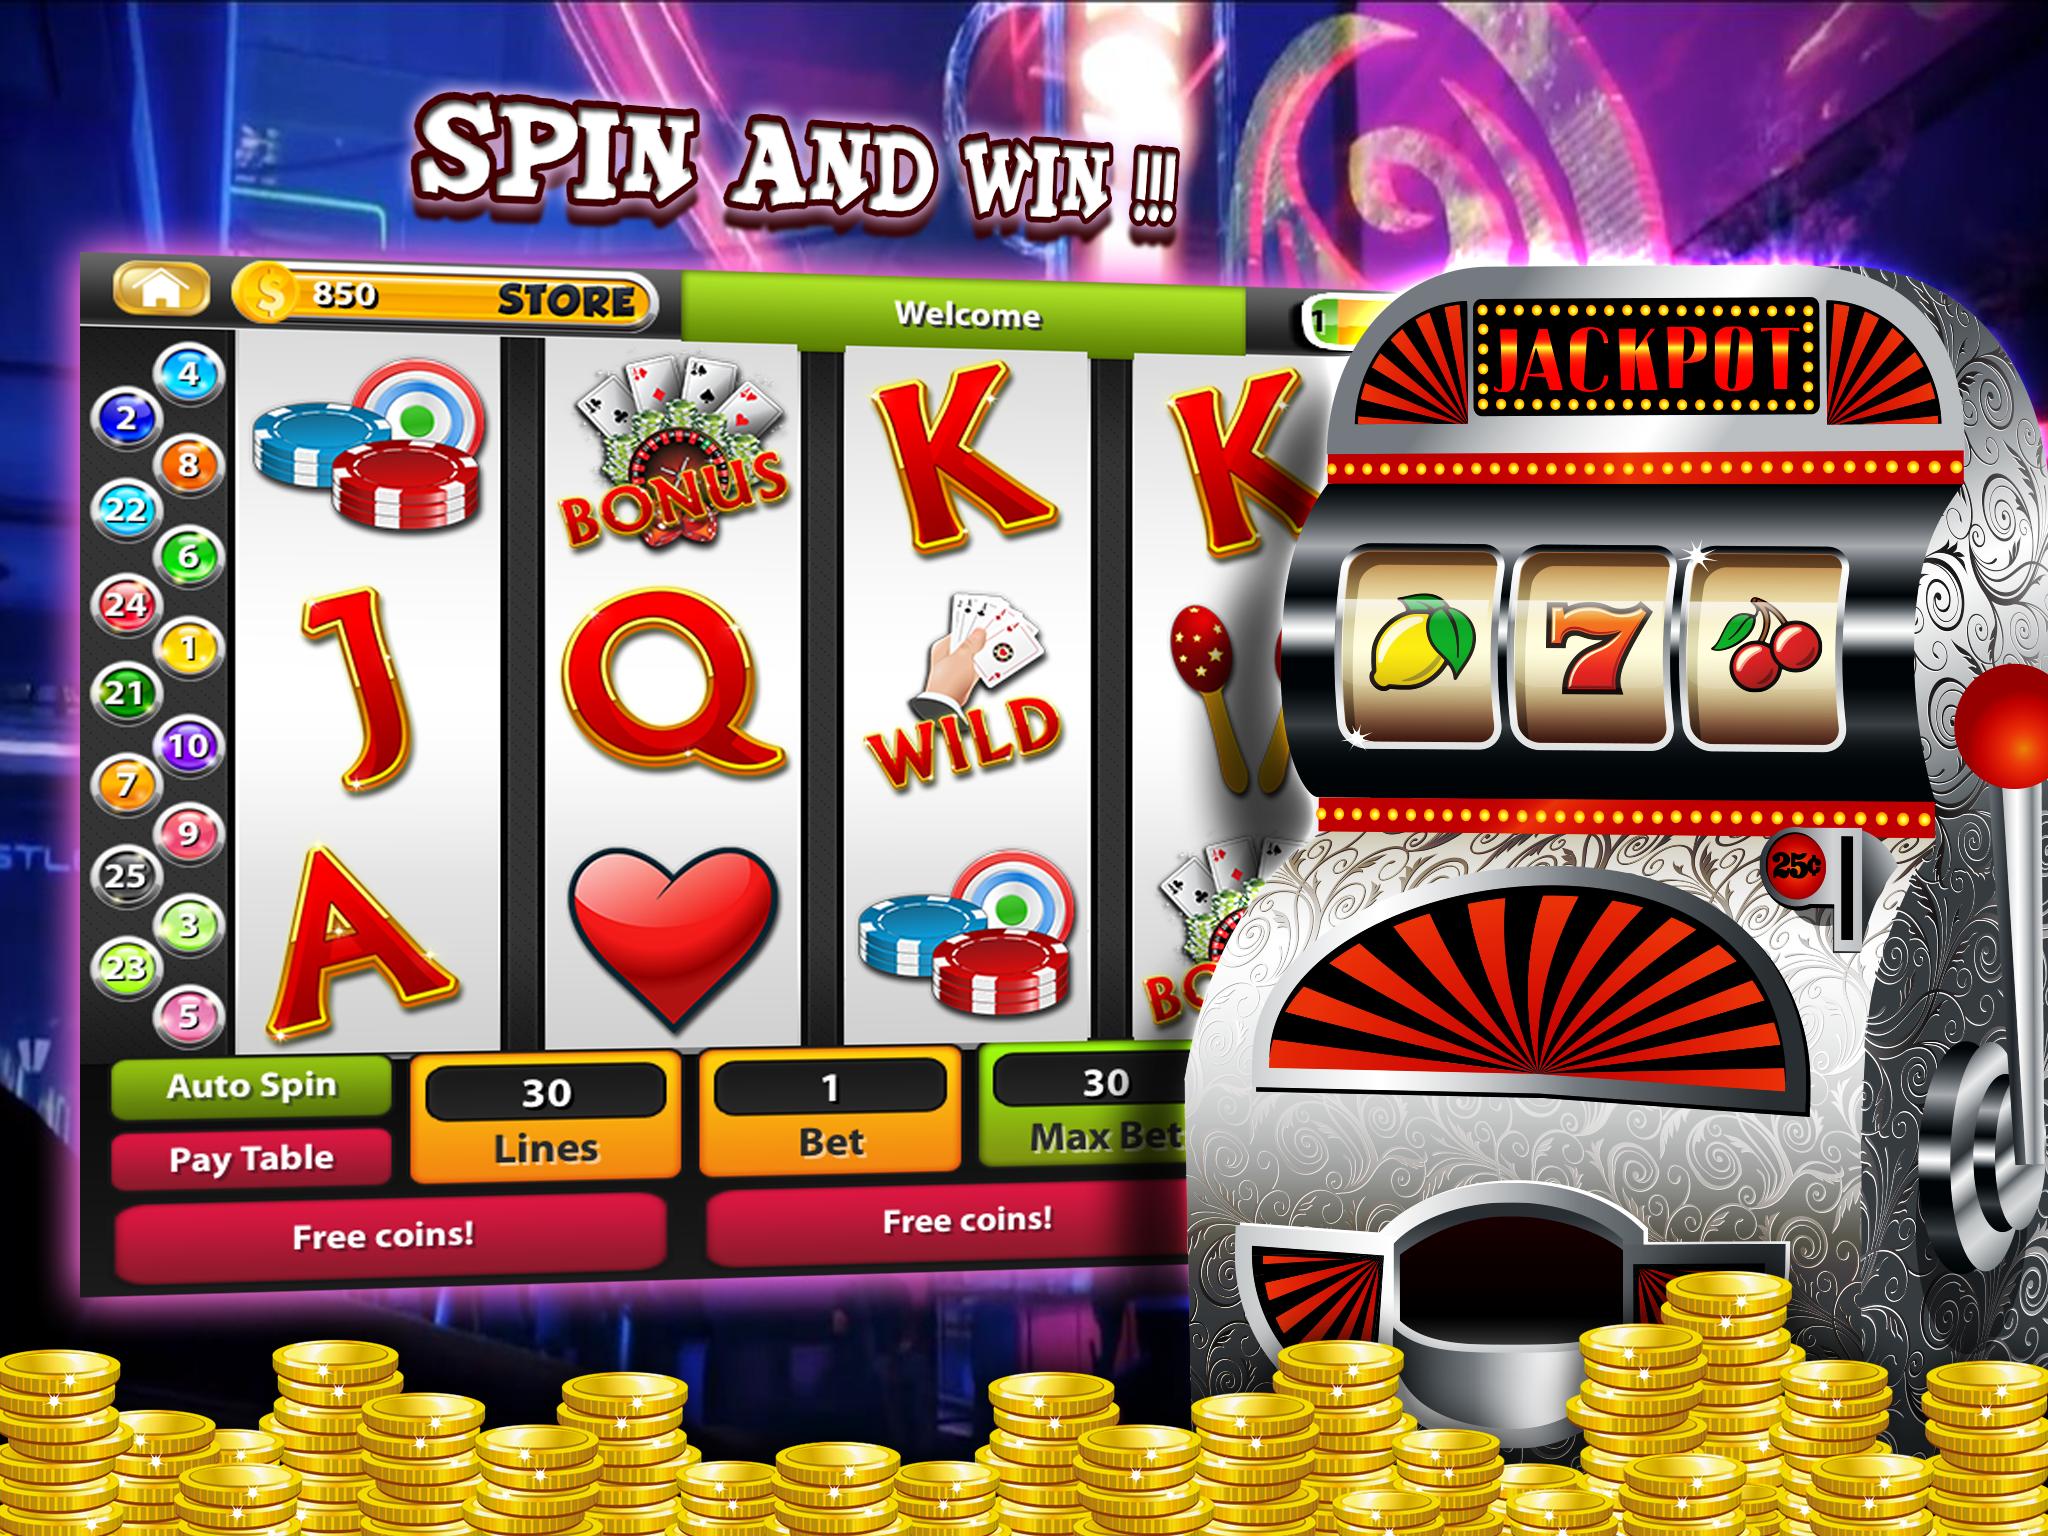 Free online casino video slot казино рояль 2006 смотреть онлайн 720 hd